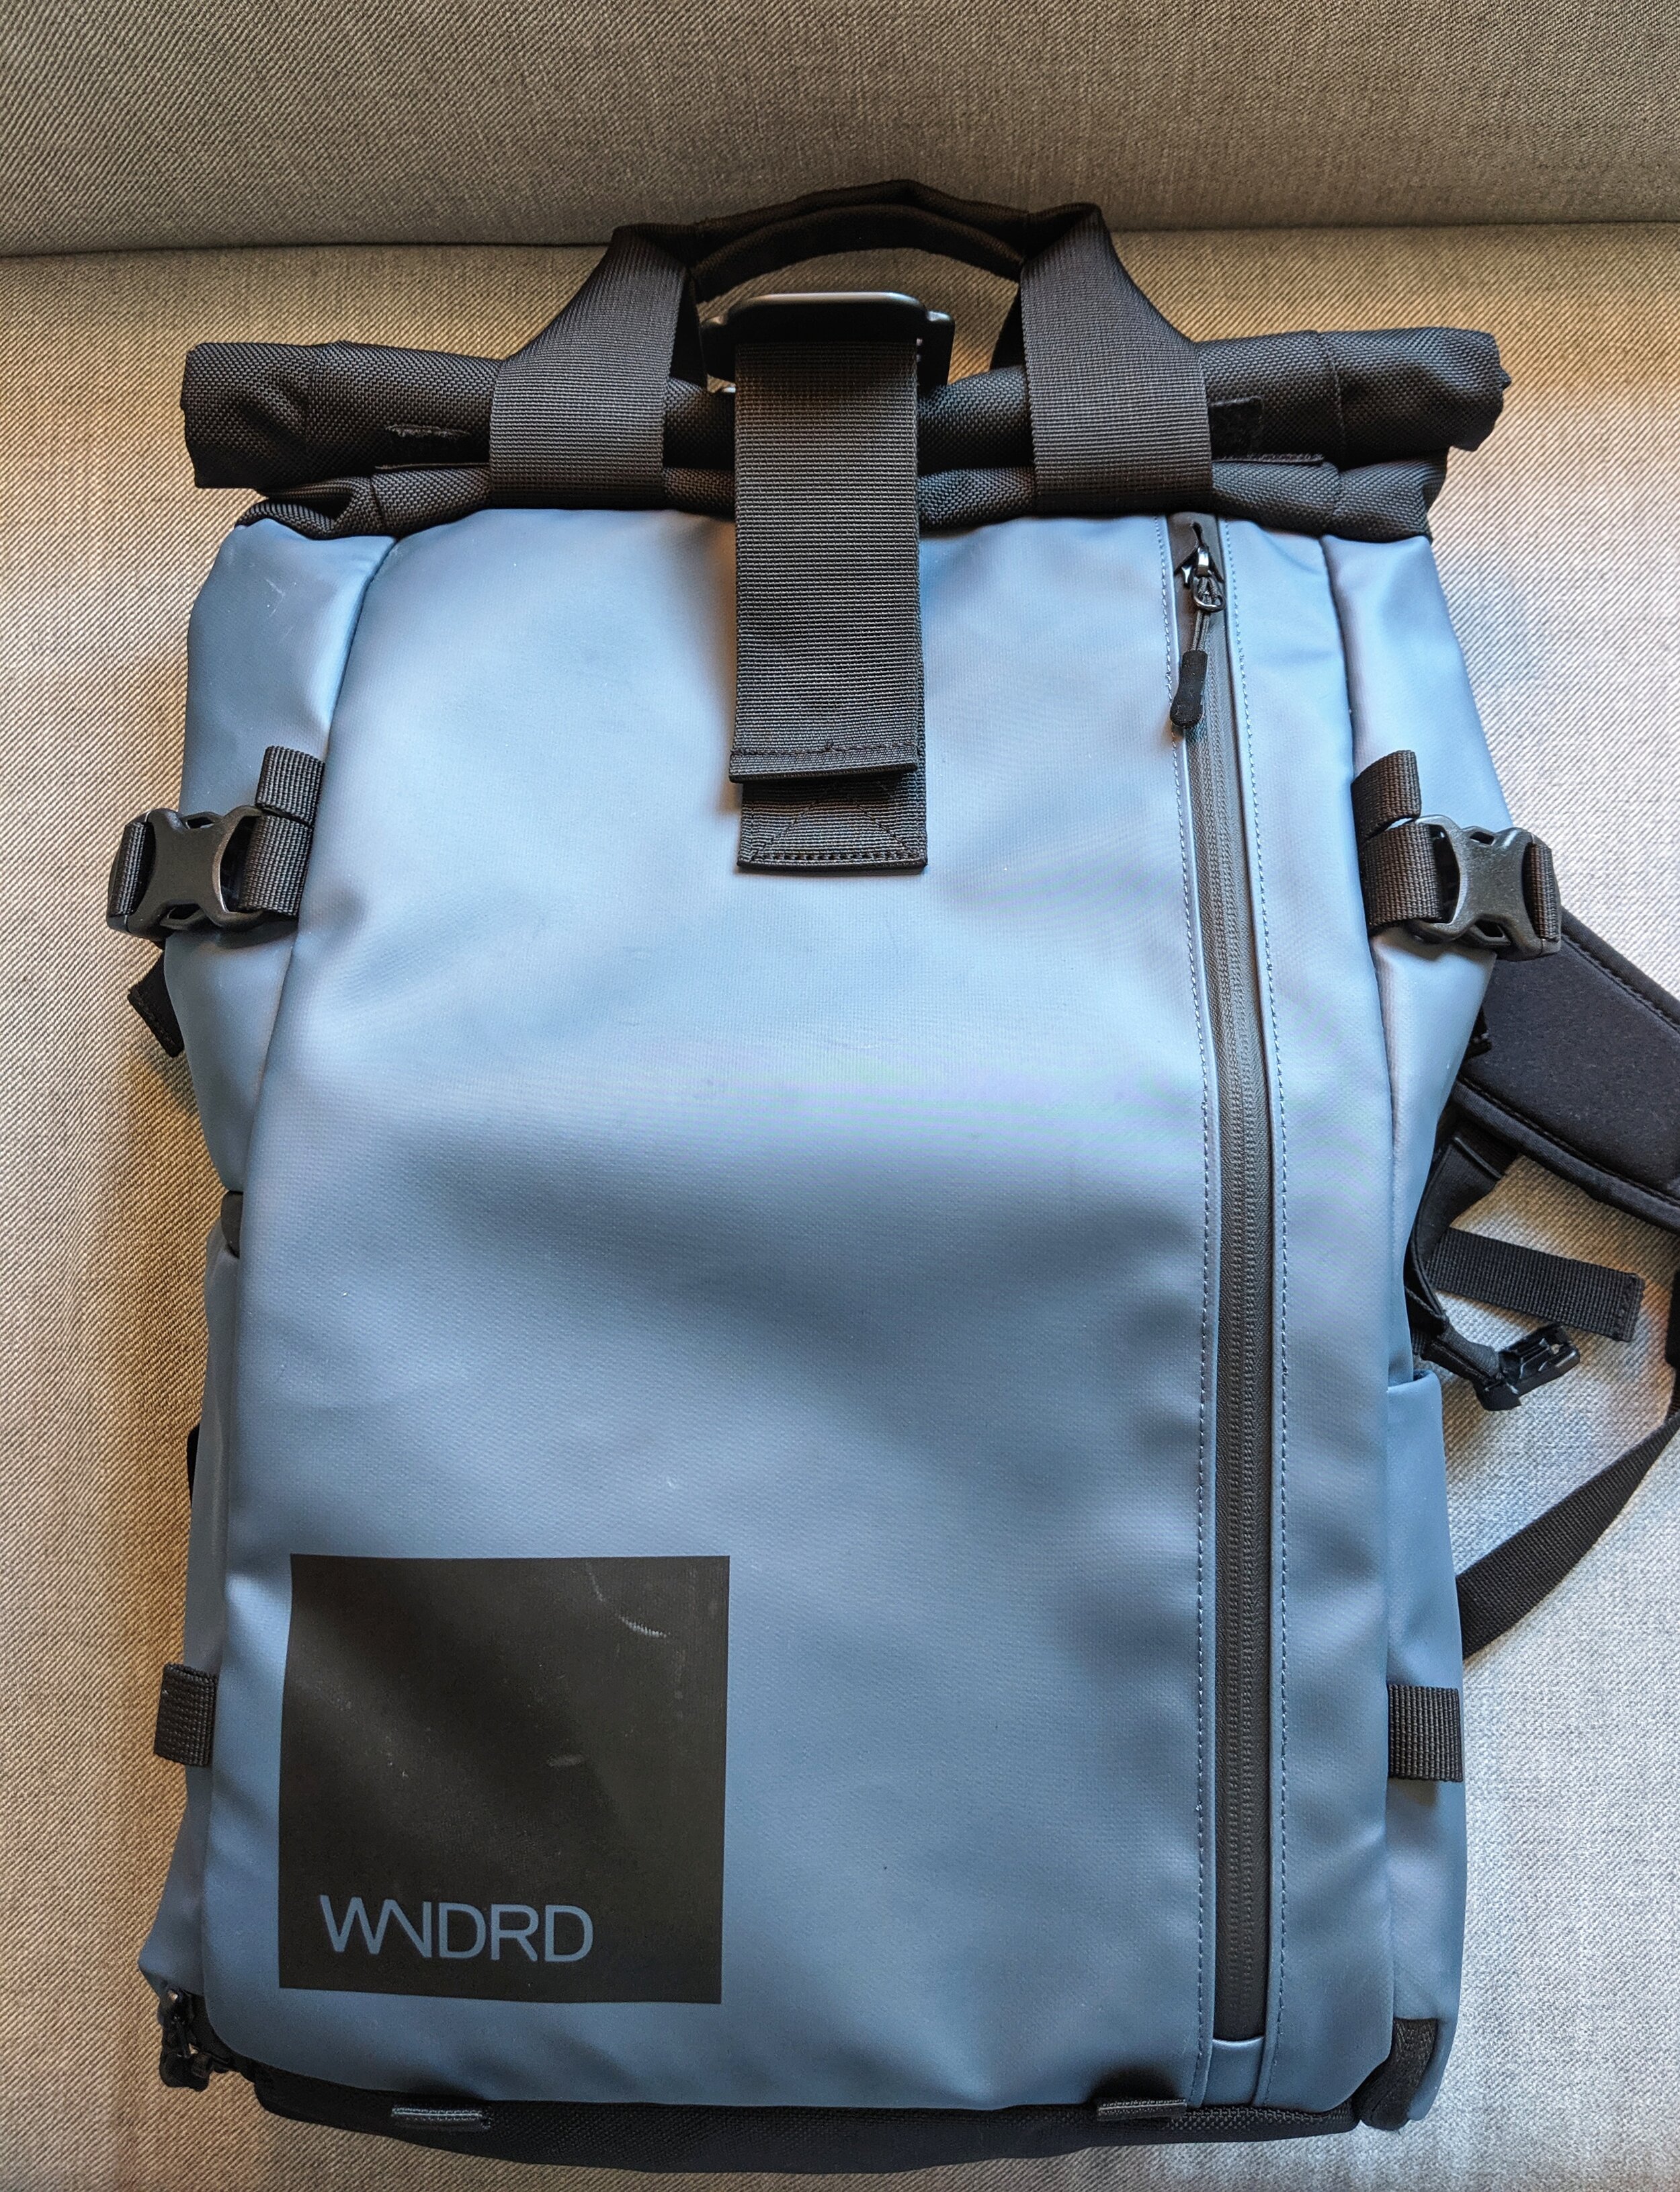 All-New WANDRD PRVKE Review: Best Travel Camera Bag?